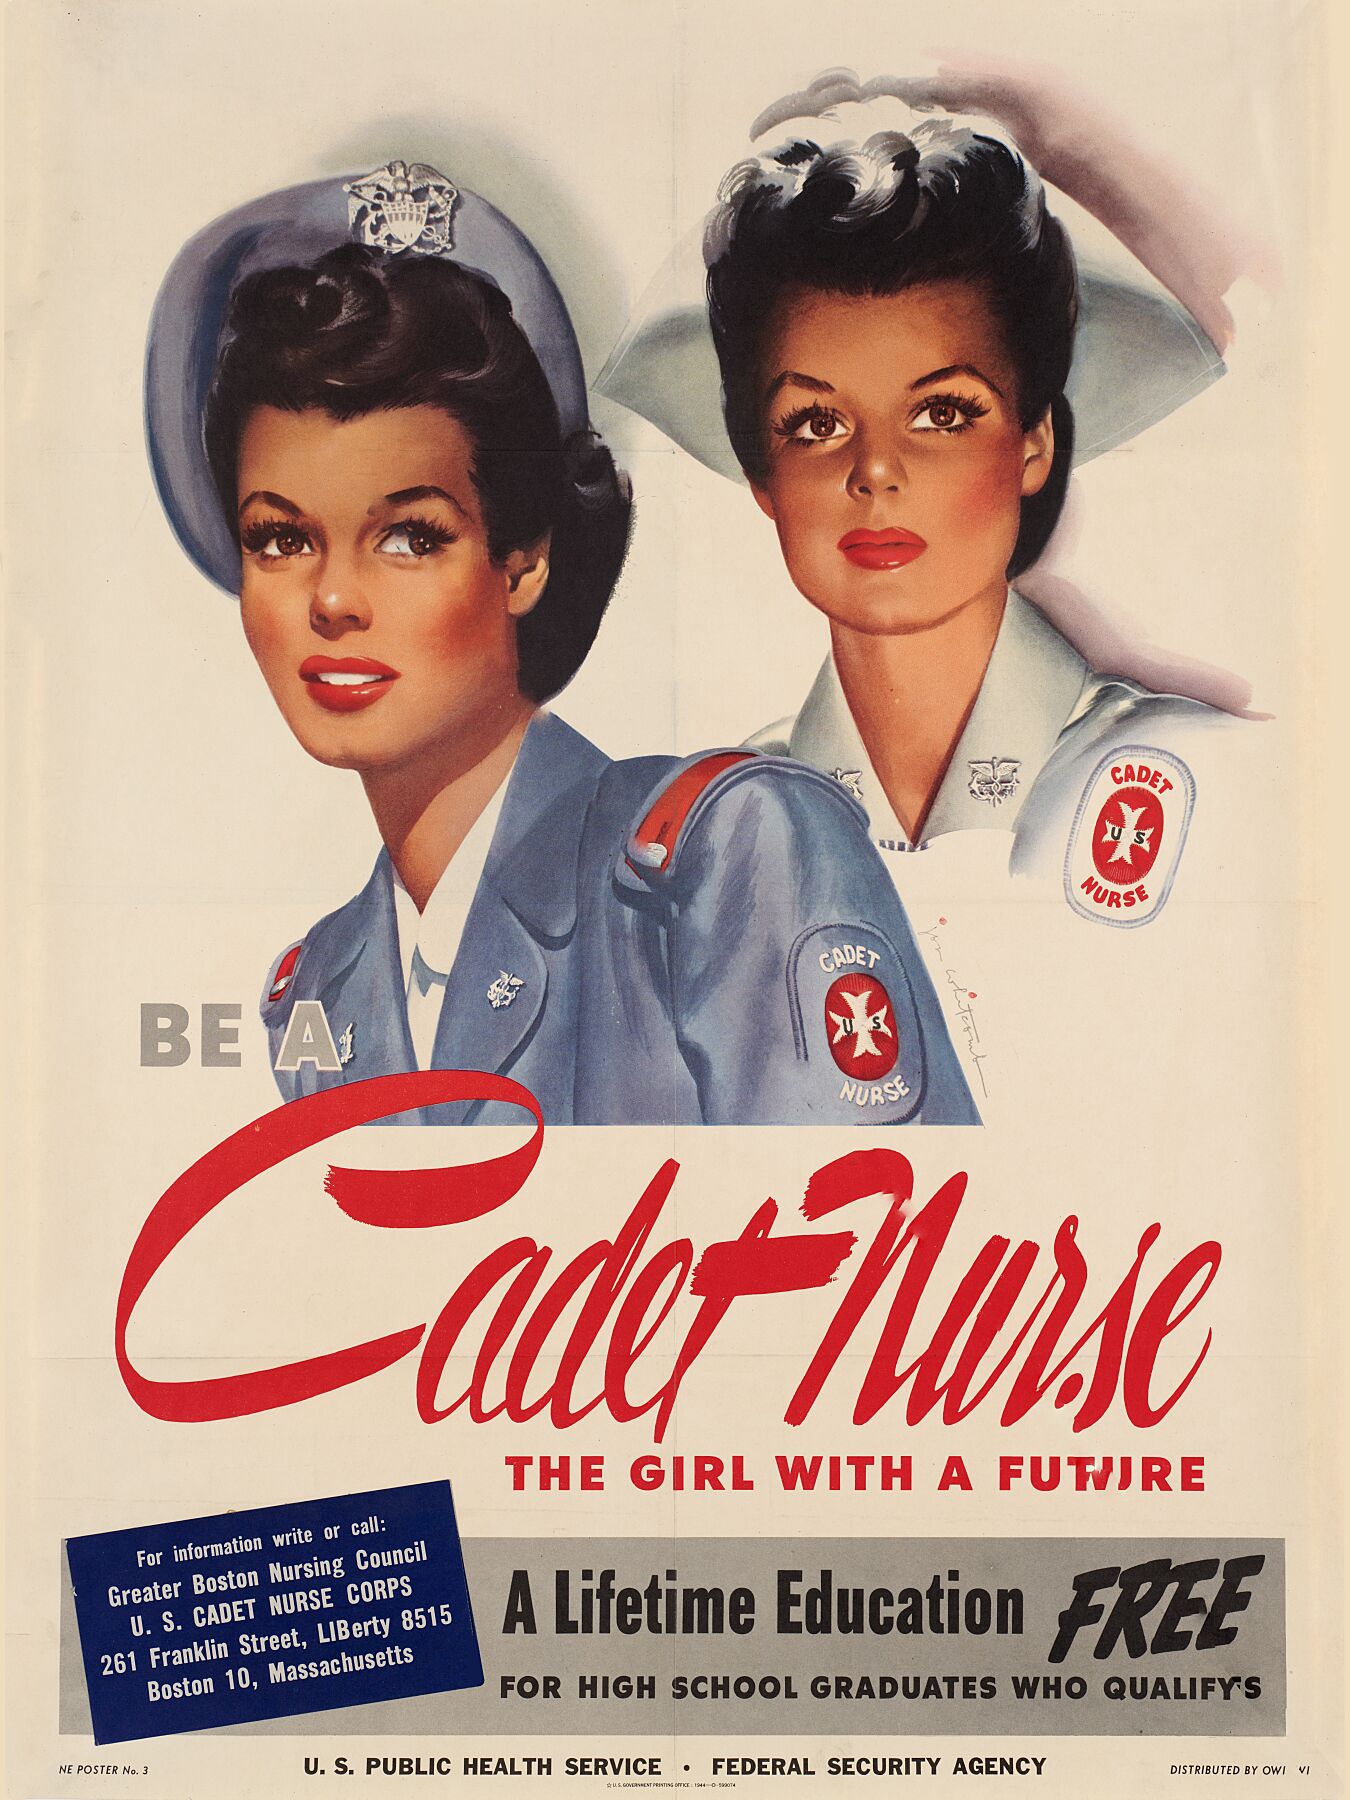 Be a Cadet Nurse. The girl with a future! Jon Whitcomb 1940